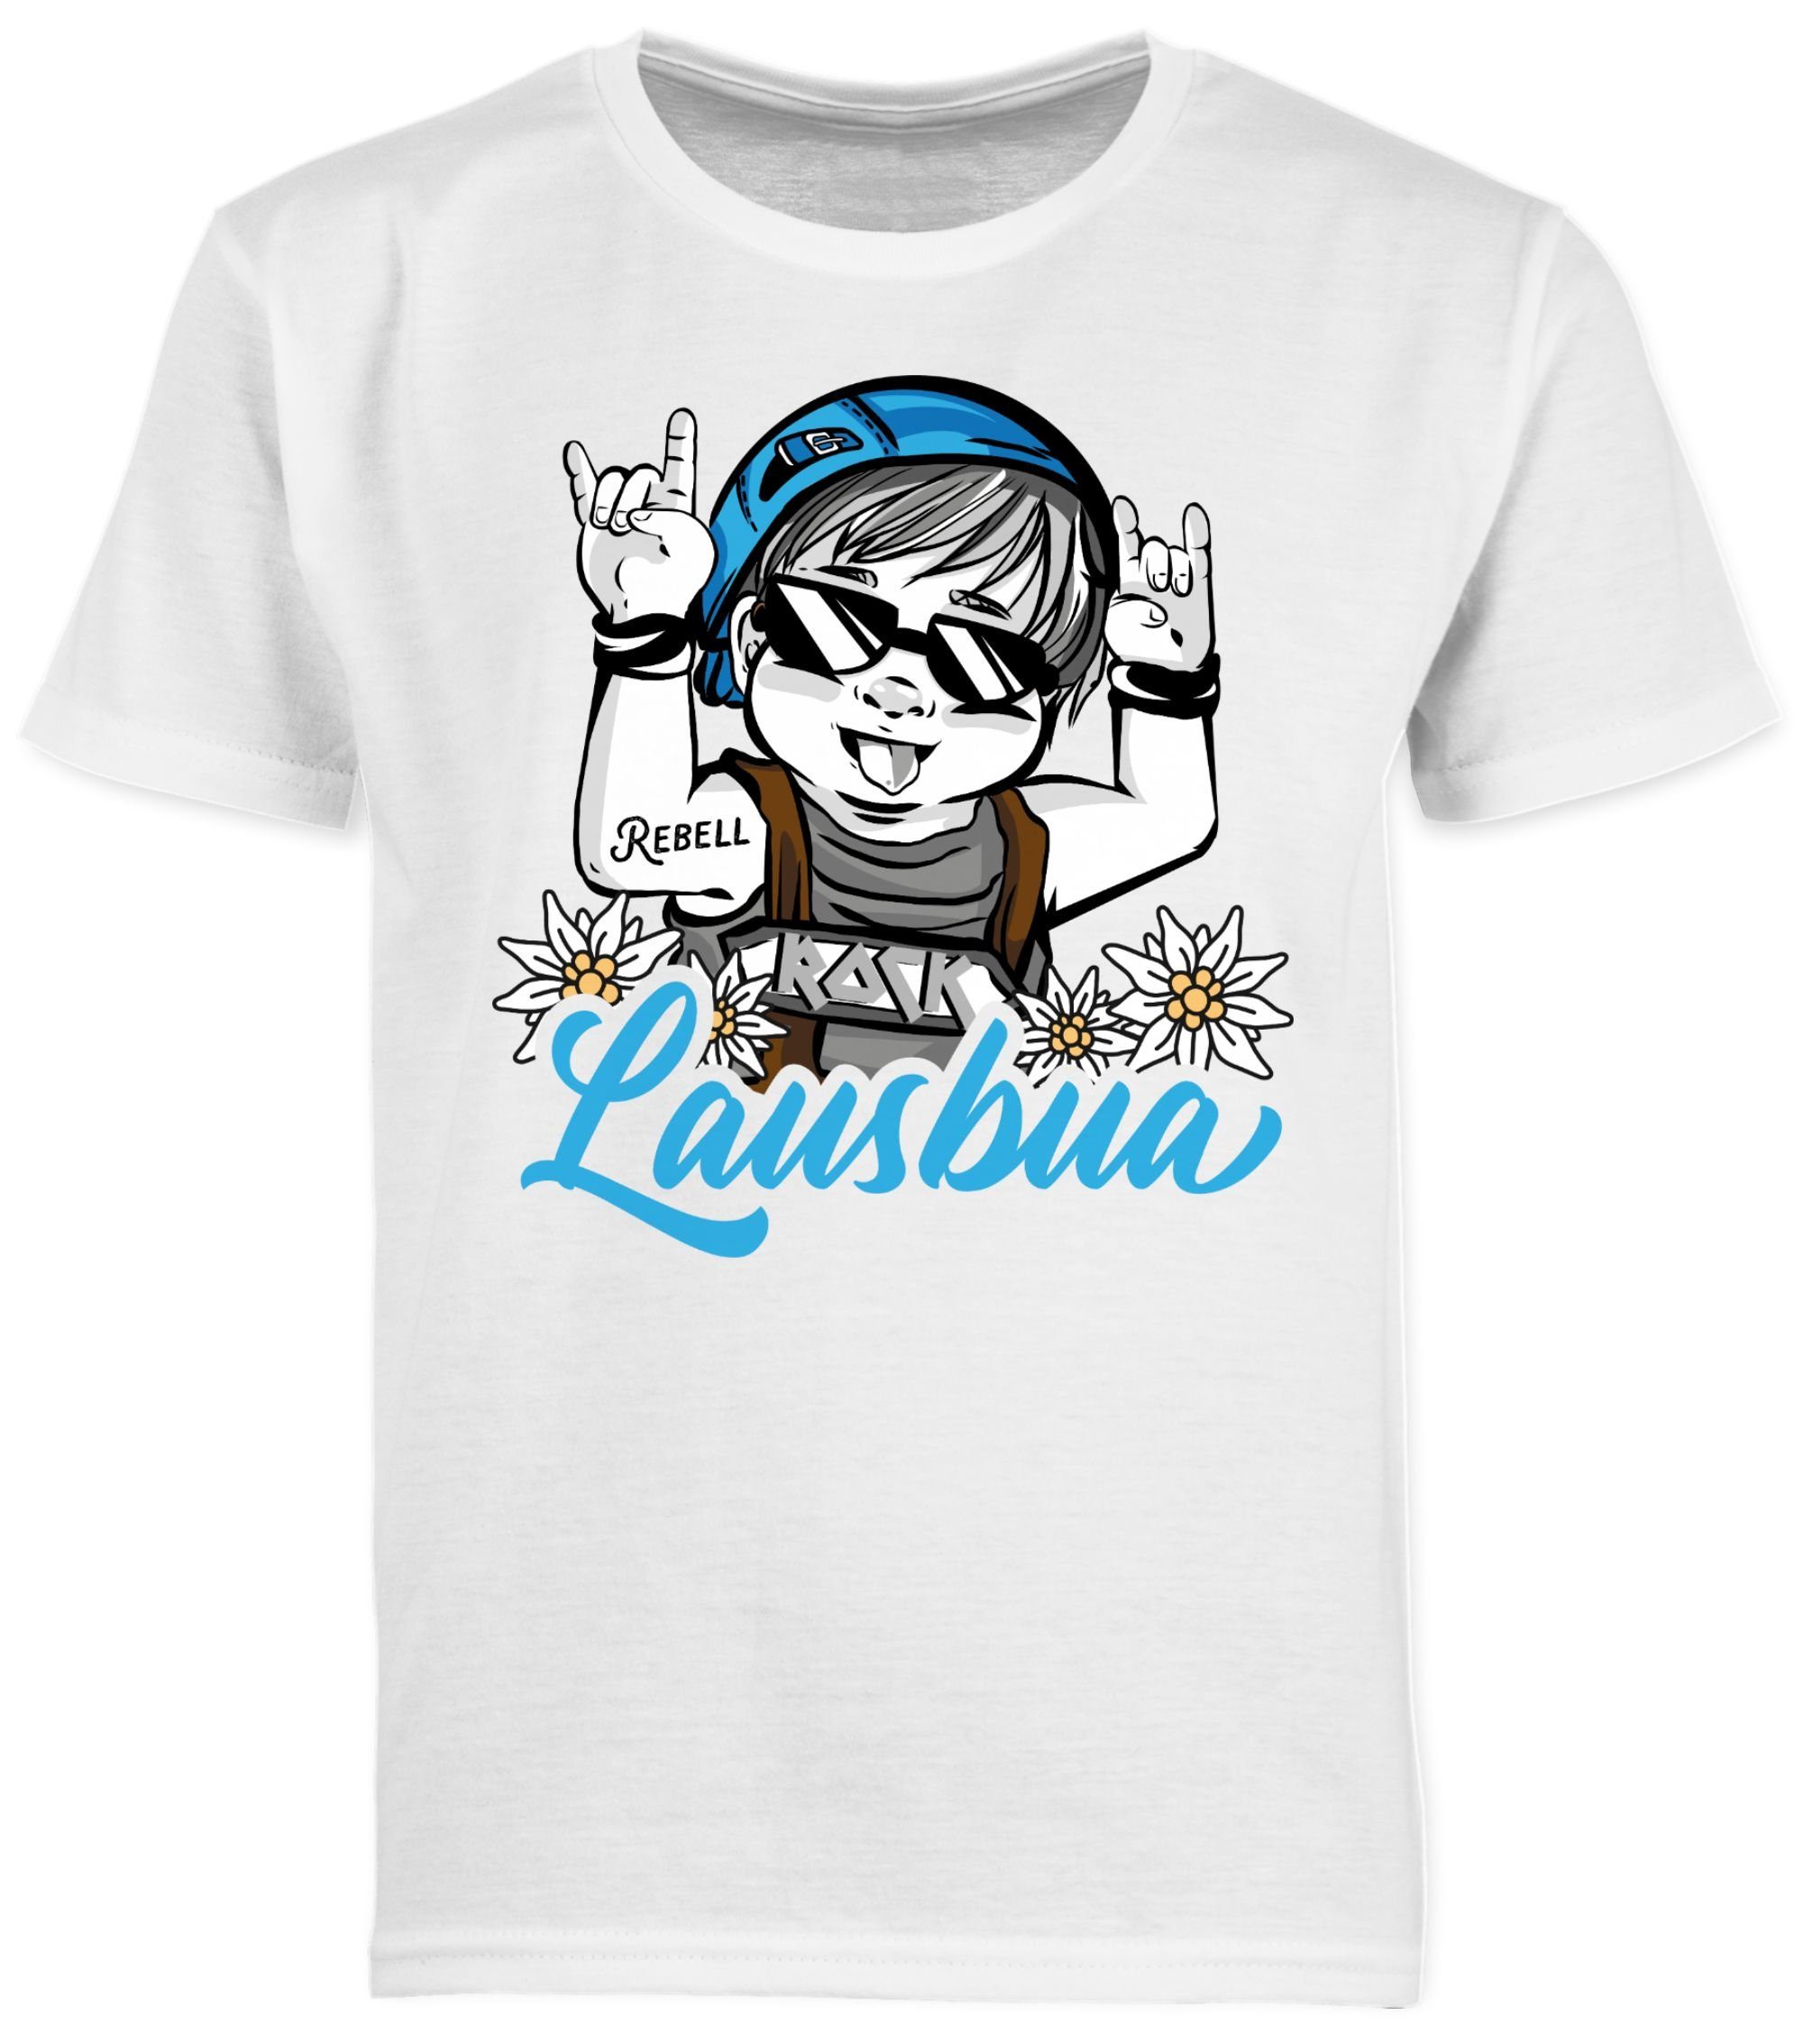 Shirtracer T-Shirt Lausbua - blau Weiß für Kinder Oktoberfest 3 Outfit Mode